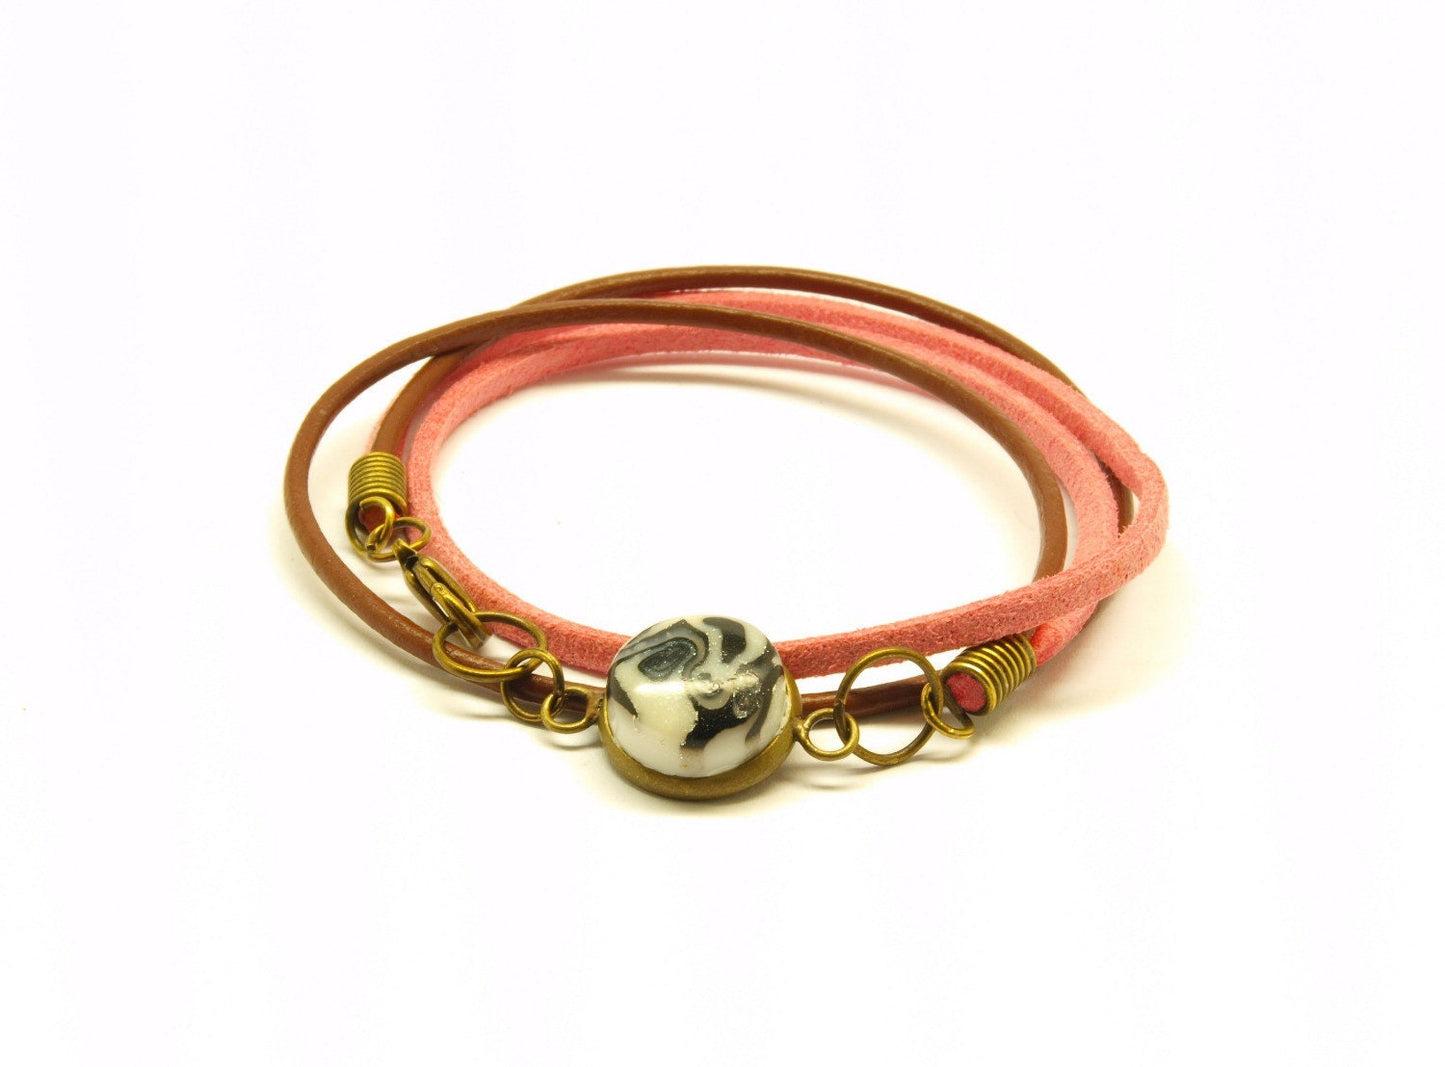 Wickelarmband nach Wahl Leder Cabochon Retro rosa braun Armband Armreifen bunt Muster silbern bronze golden